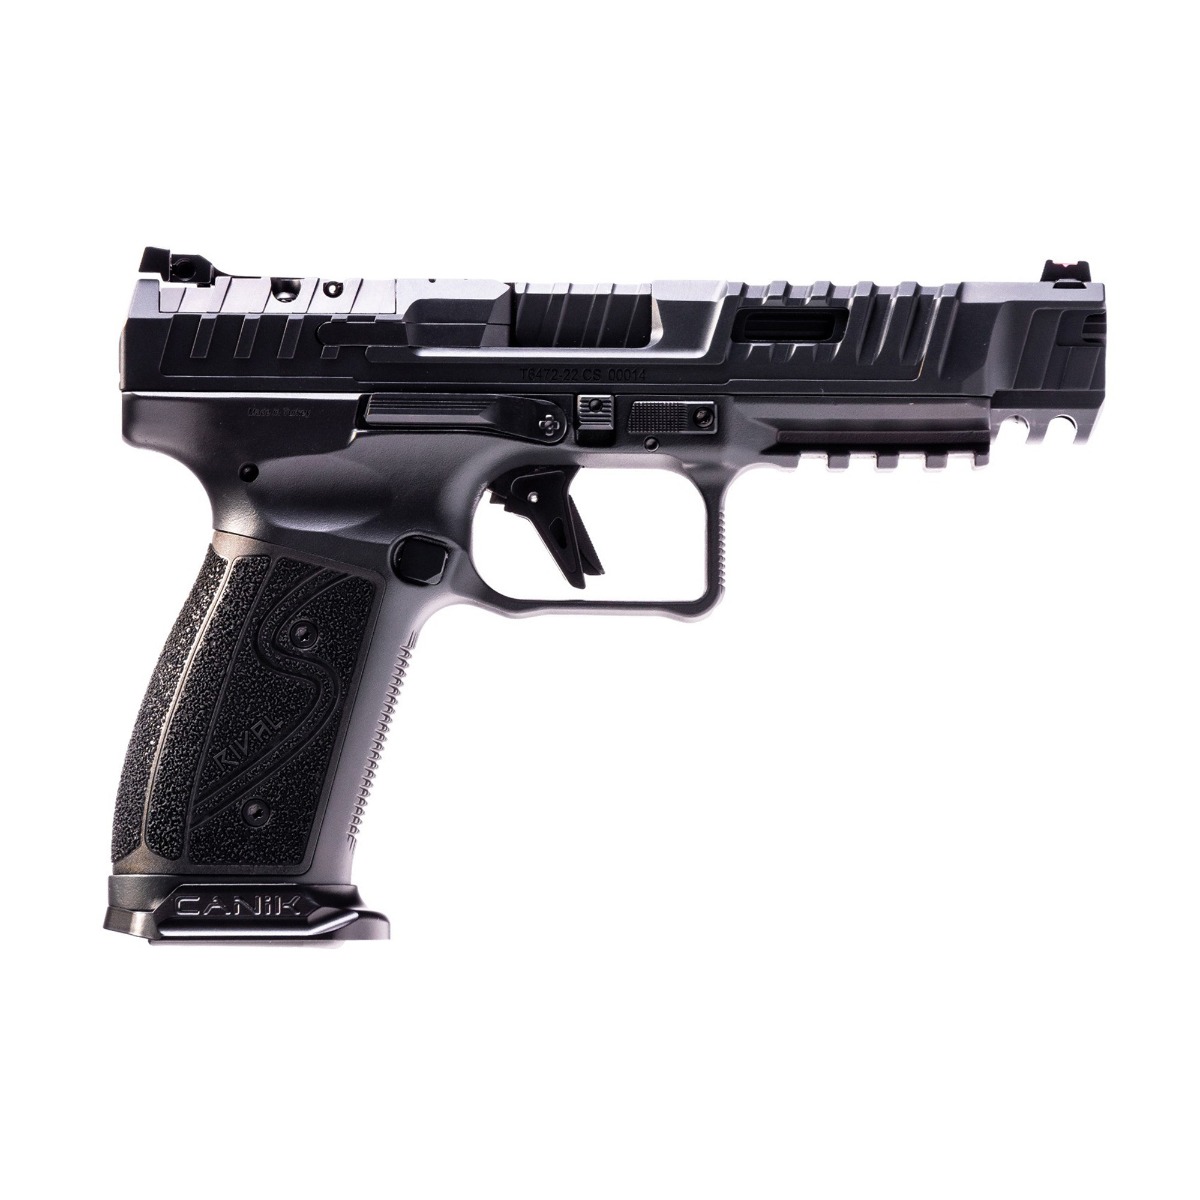 Canik TP9 Elite Combat Pistol, 9mm (1) 15rd. & (1) 18rd. Mag, Black: MGW